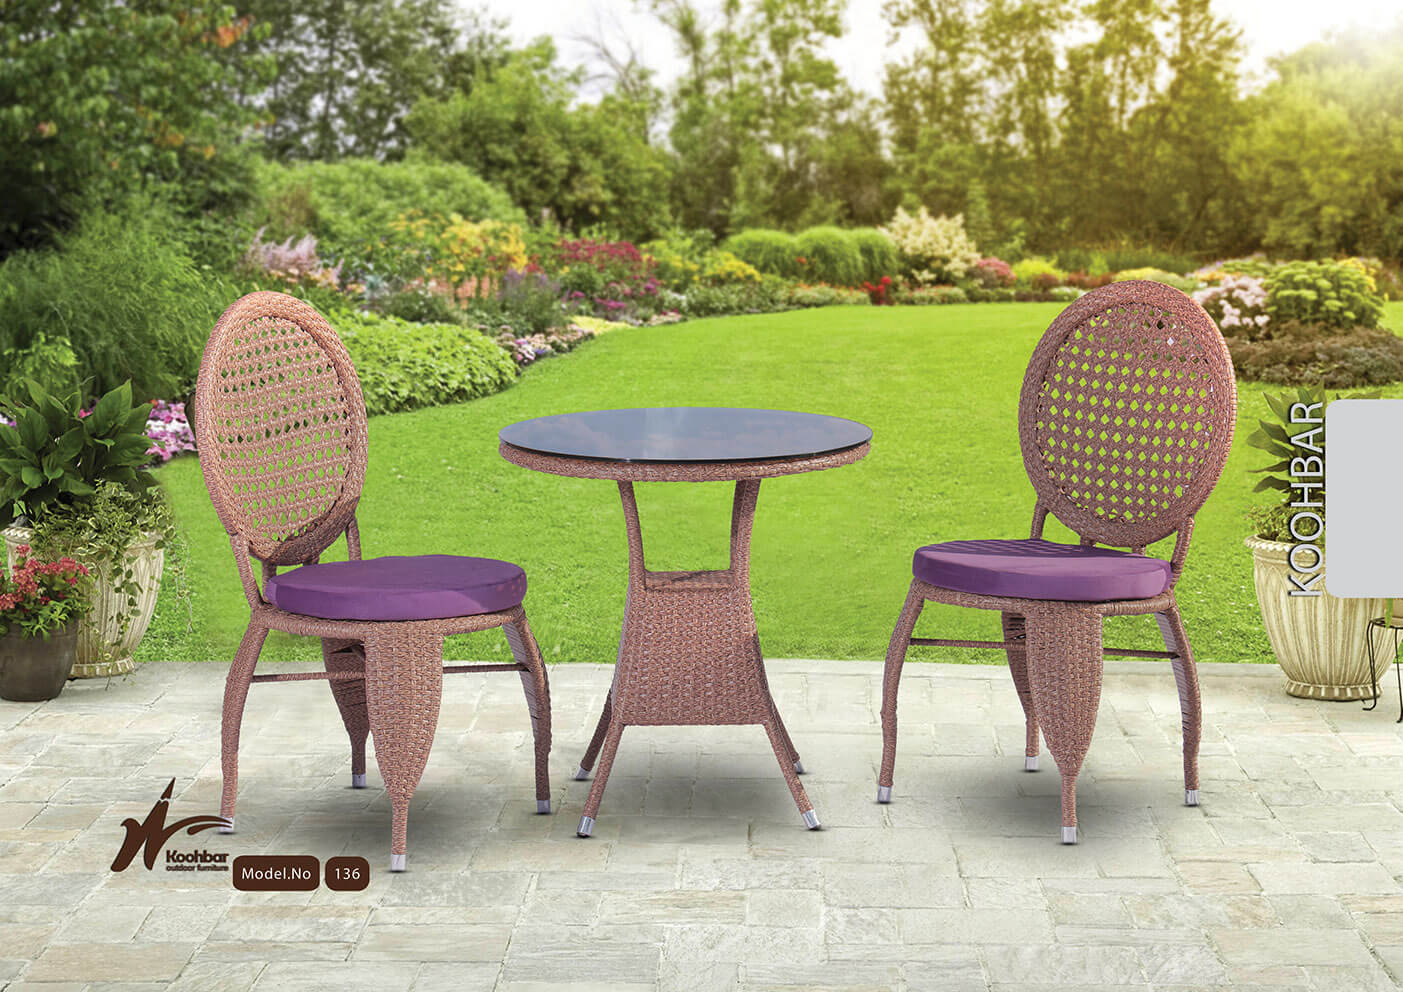 kohbar patio conversation sets 136 model0 - ست میز صندلی حصیری حیاط کوهبر مدل ۱۳۶ -  - patio-dining-furniture